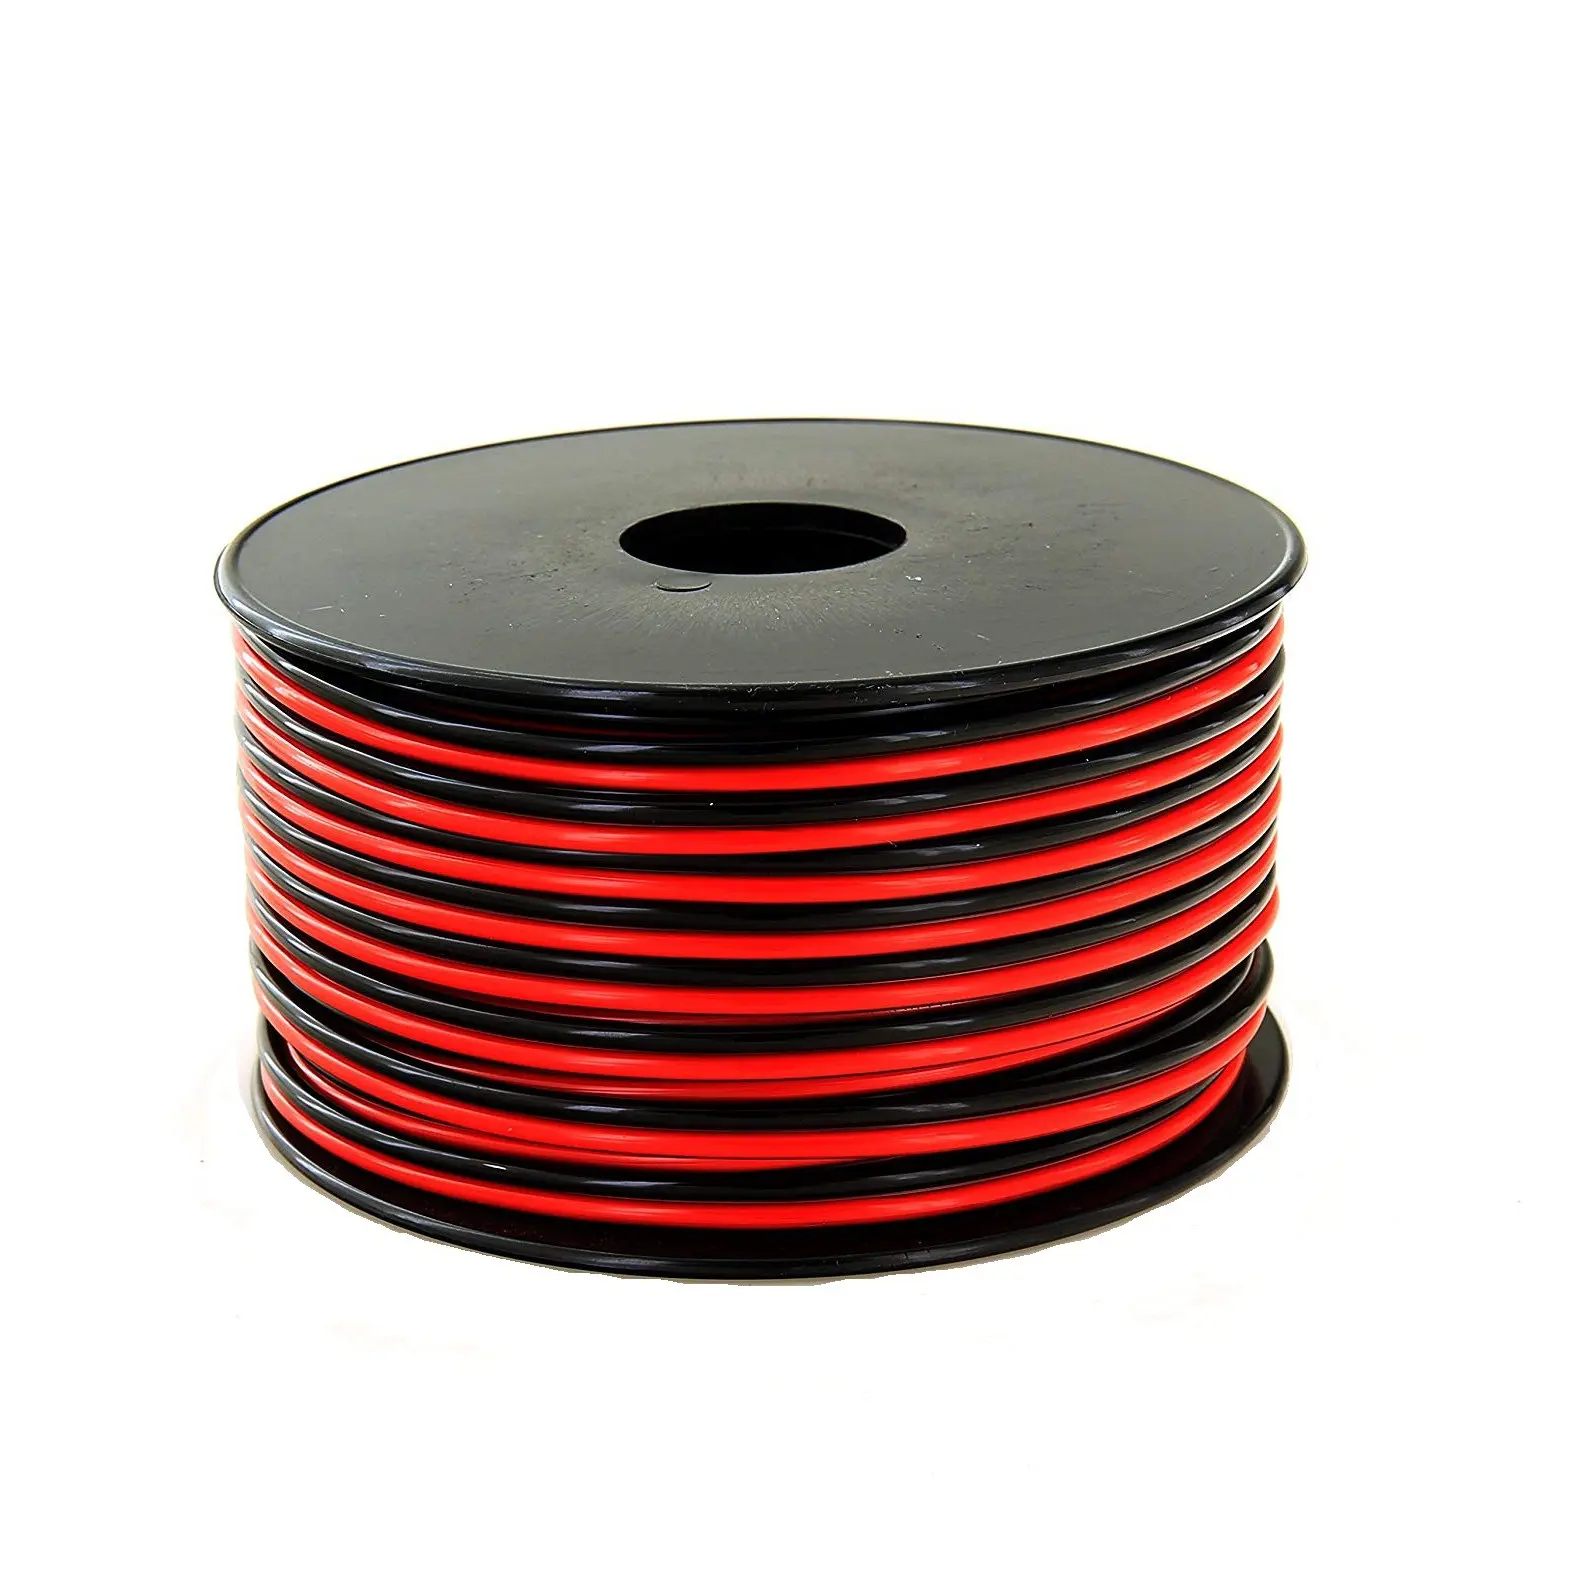 Kabel Speaker Meksiko CCA rol ujung tinggi 2*16AWG kabel Audio PVC hitam merah